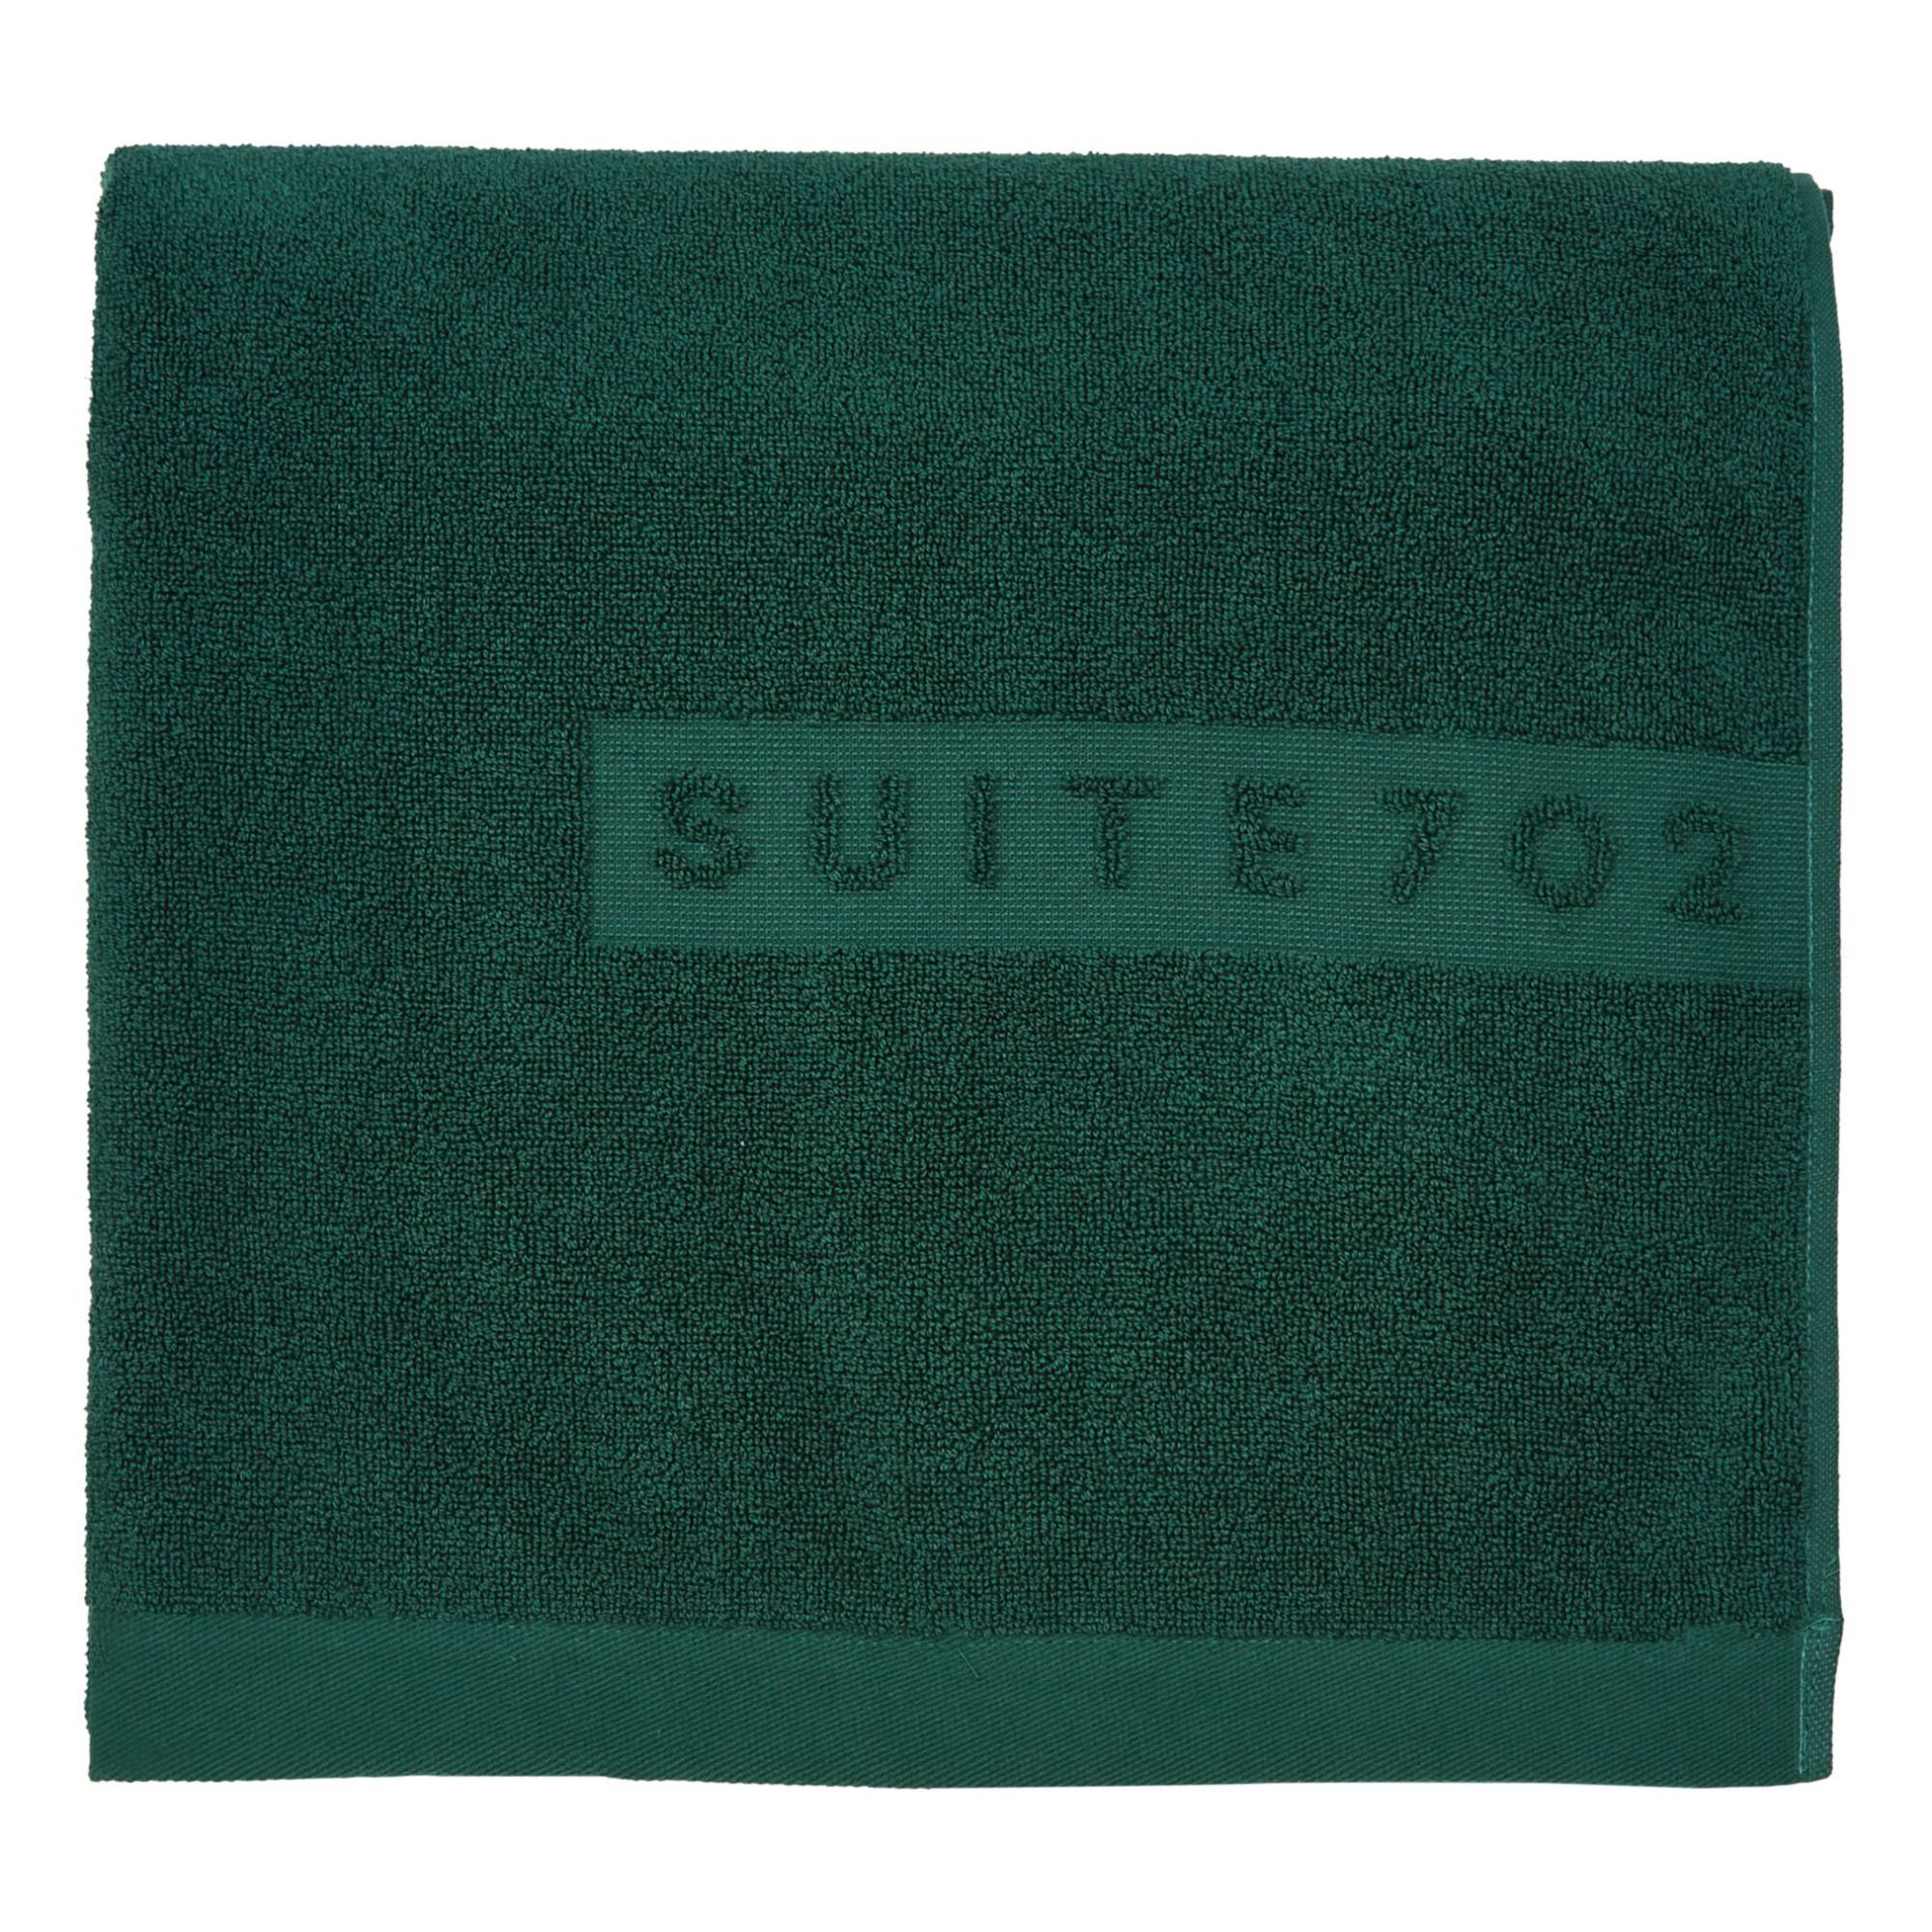 Suite 702 - Drap de bain en coton bio - Vert émeraude